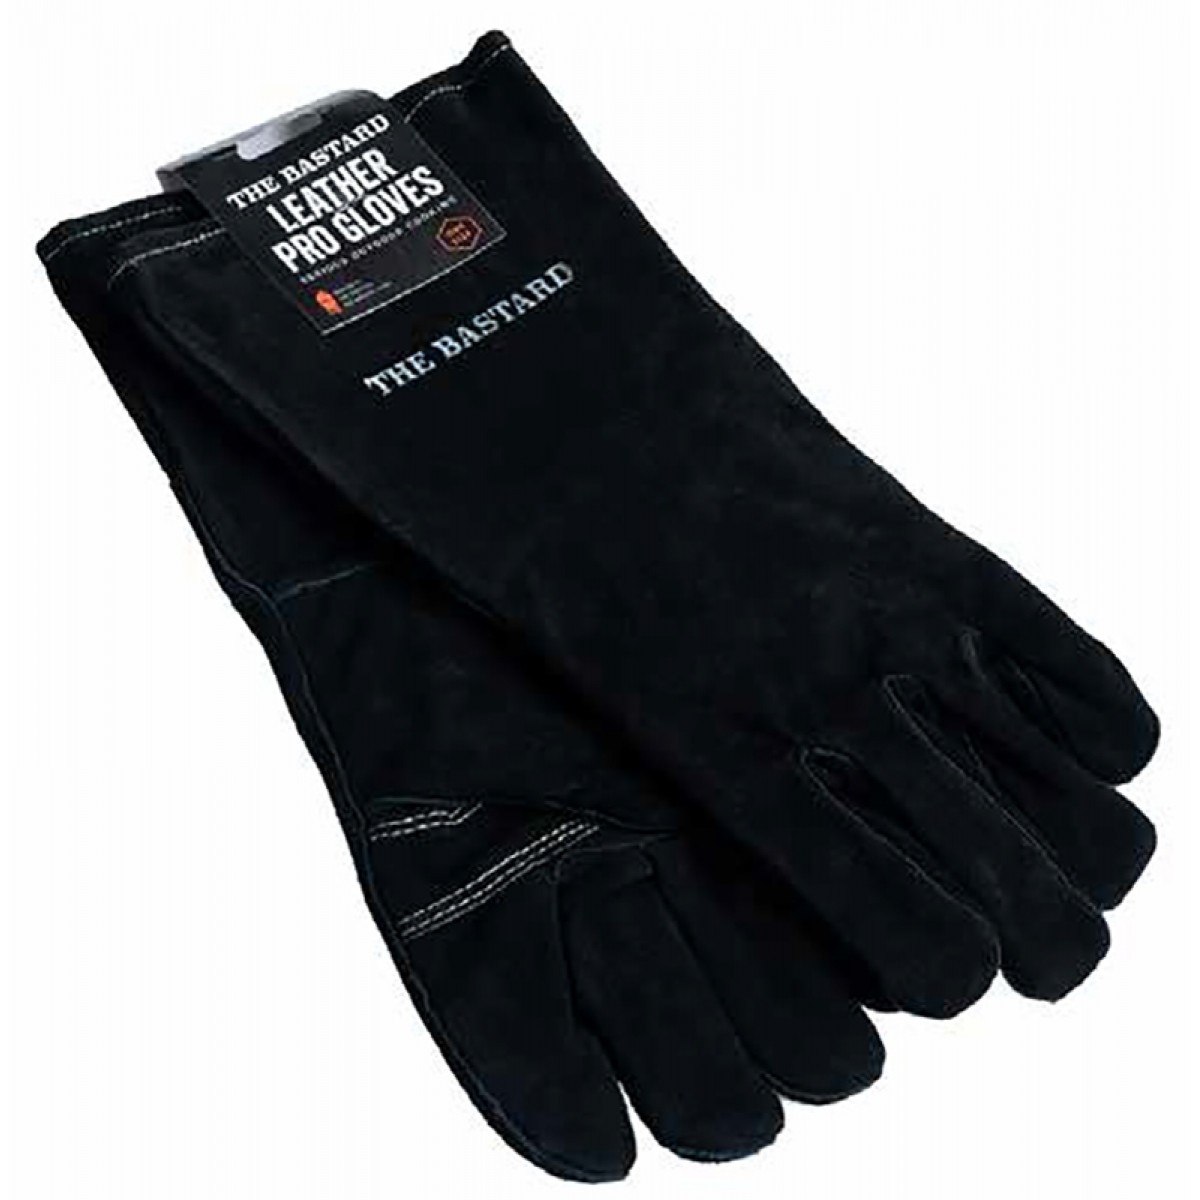 The Bastard BB057 Leather Pro Gloves